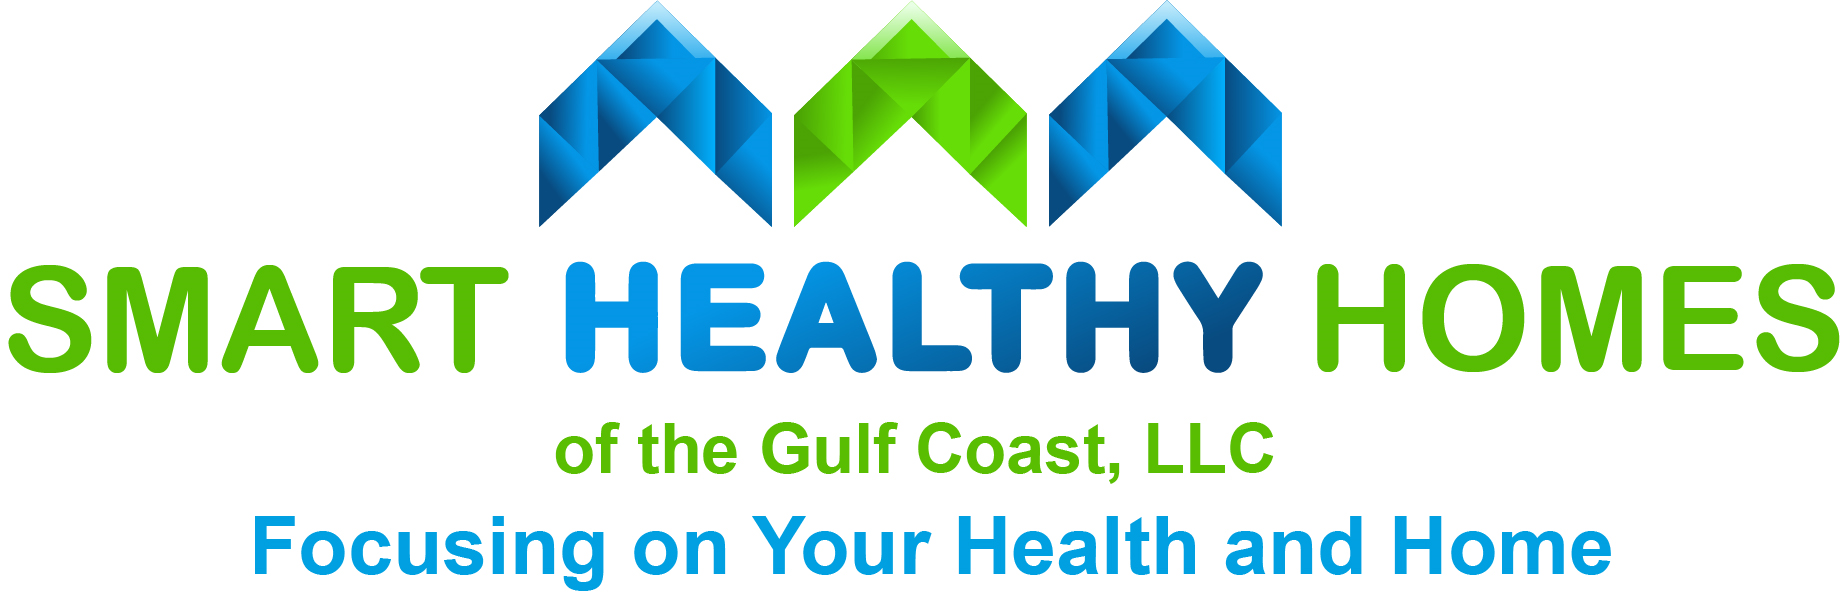 Smart Healthy Homes of the Gulf Coast, LLC Logo